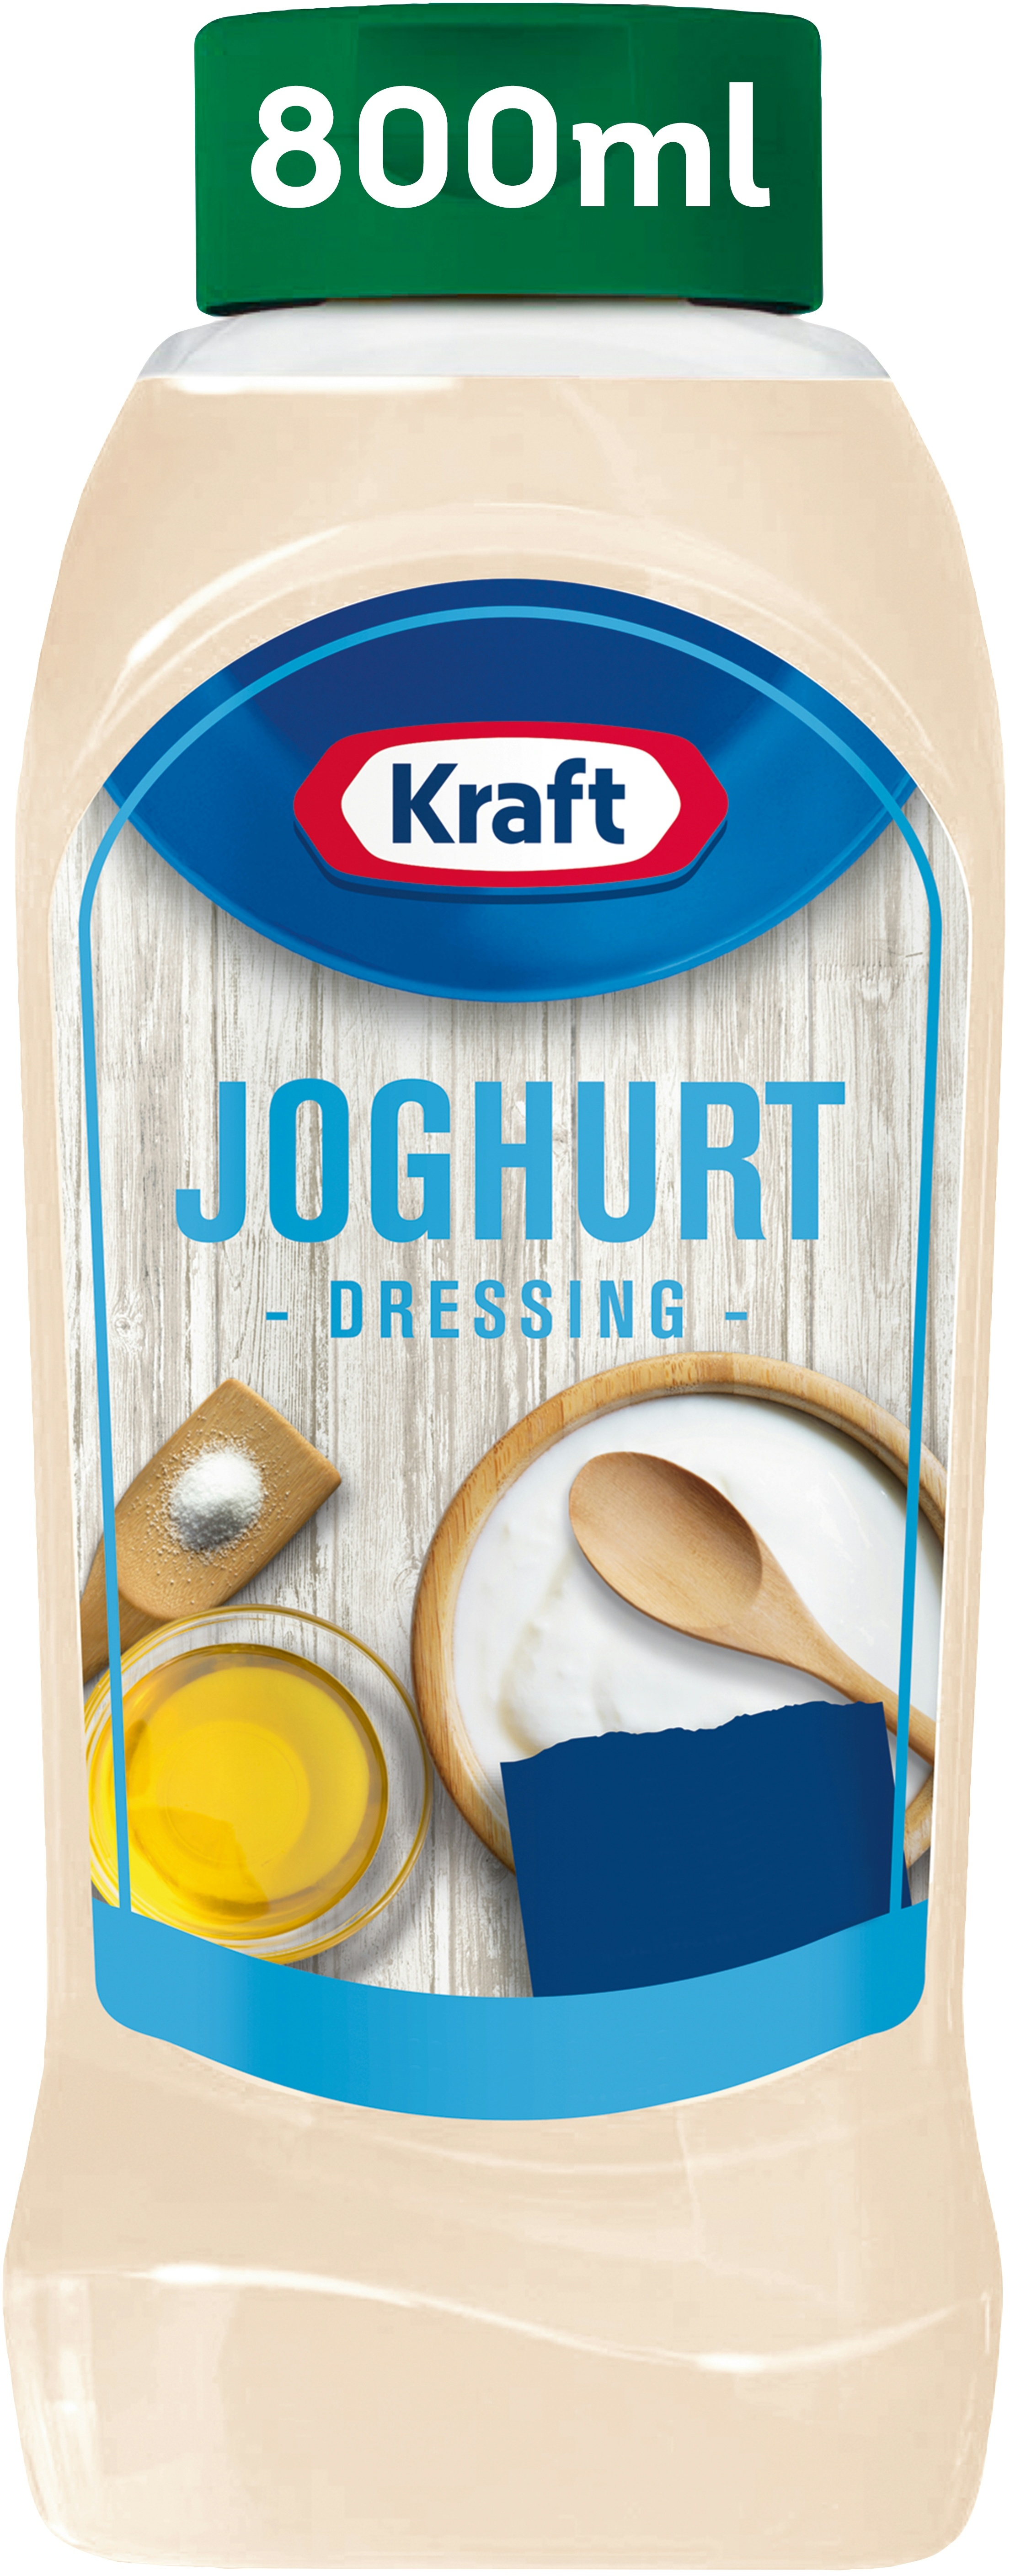 Kraft Joghurt Dressing (800ml)